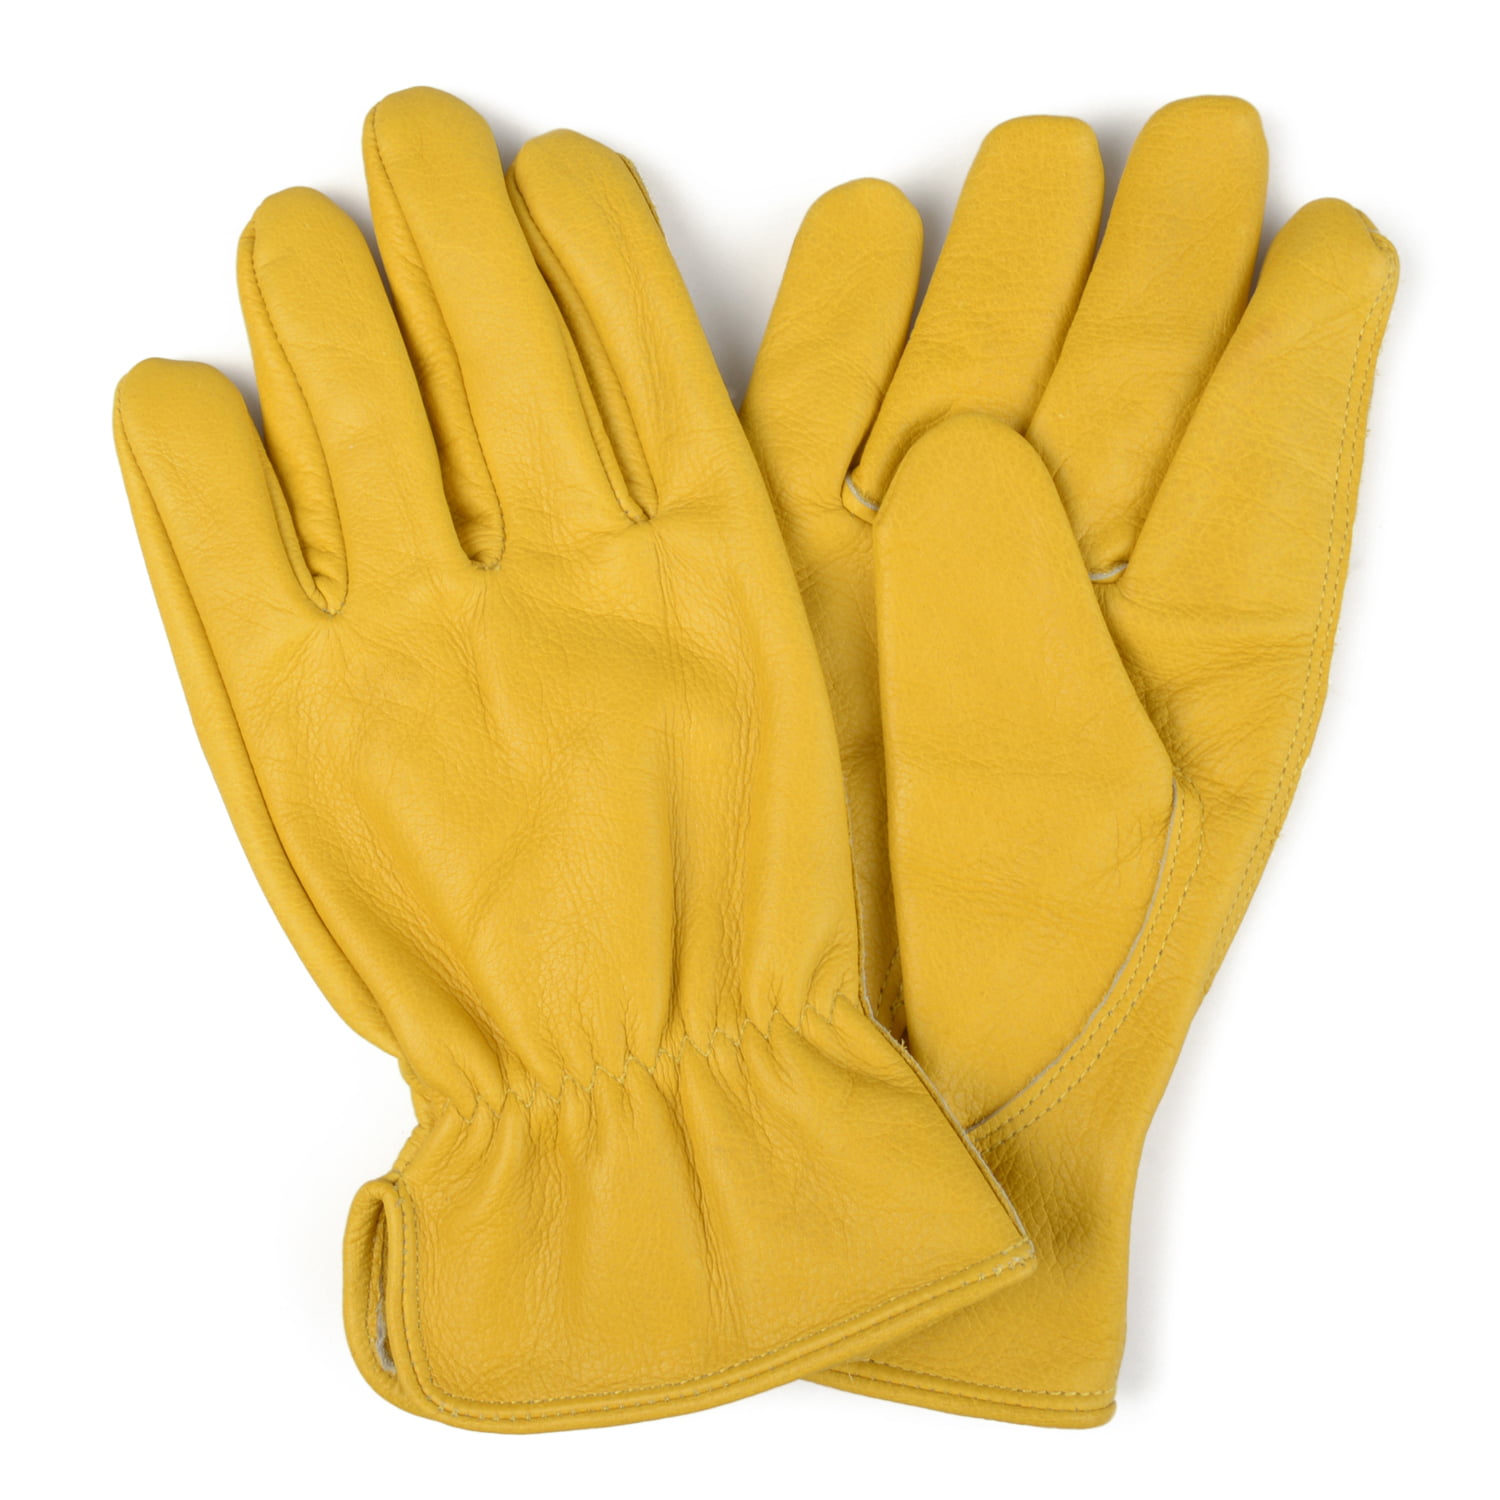 Territory Mens Work Genuine Leather Gloves - Walmart.com